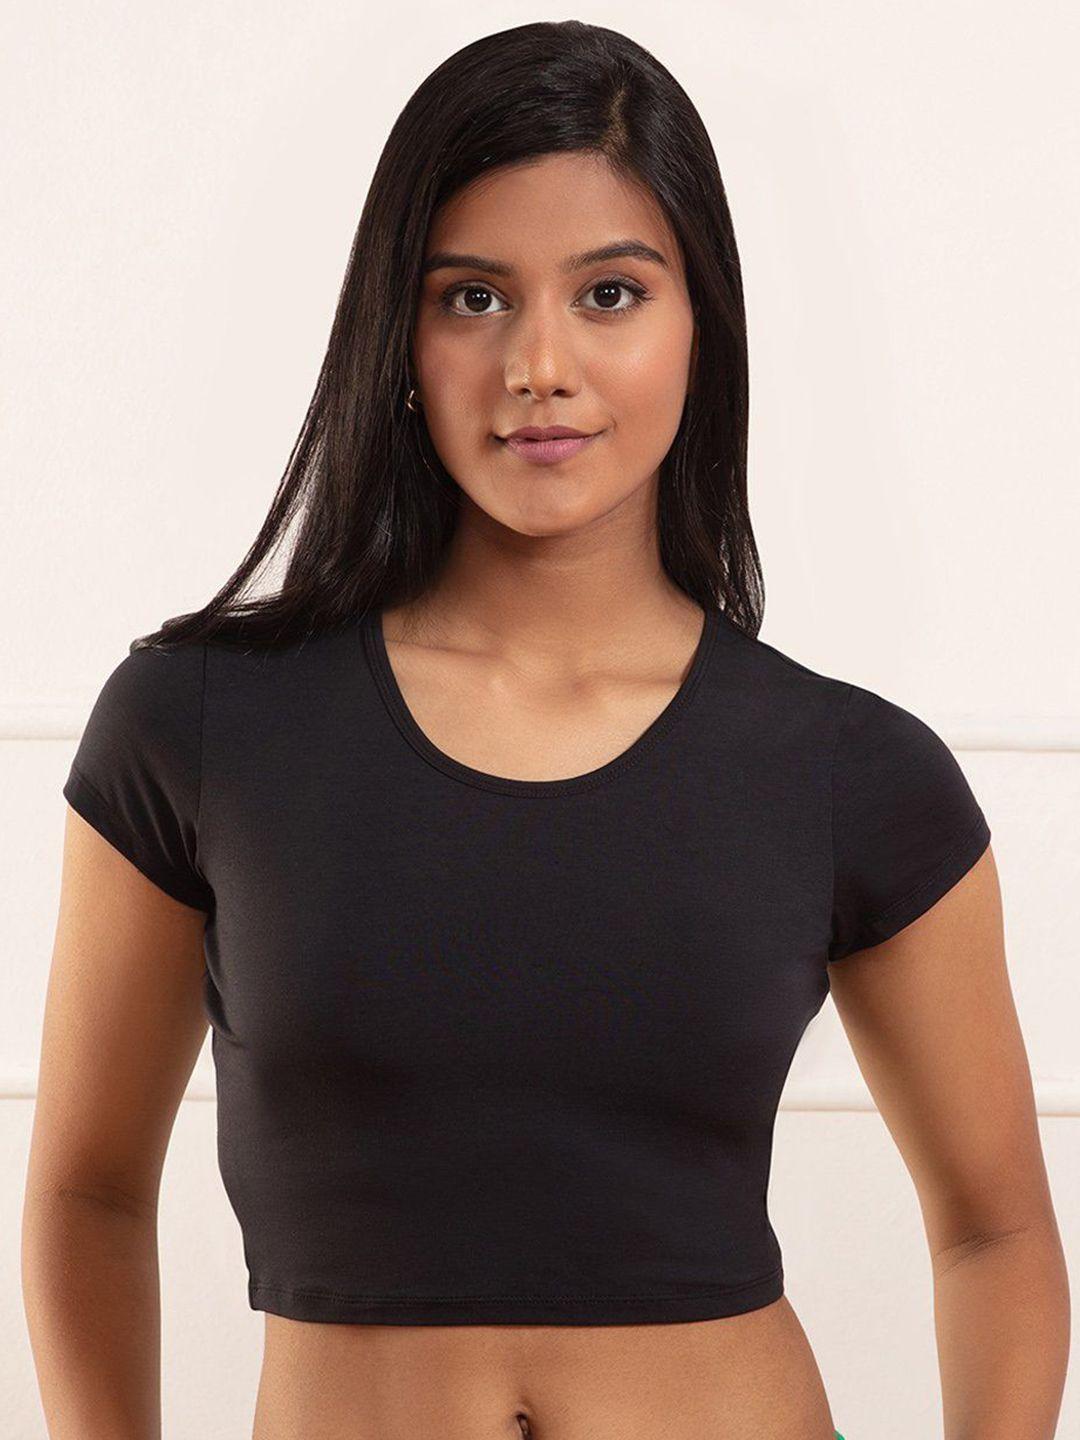 nykd-women-black-t-shirt